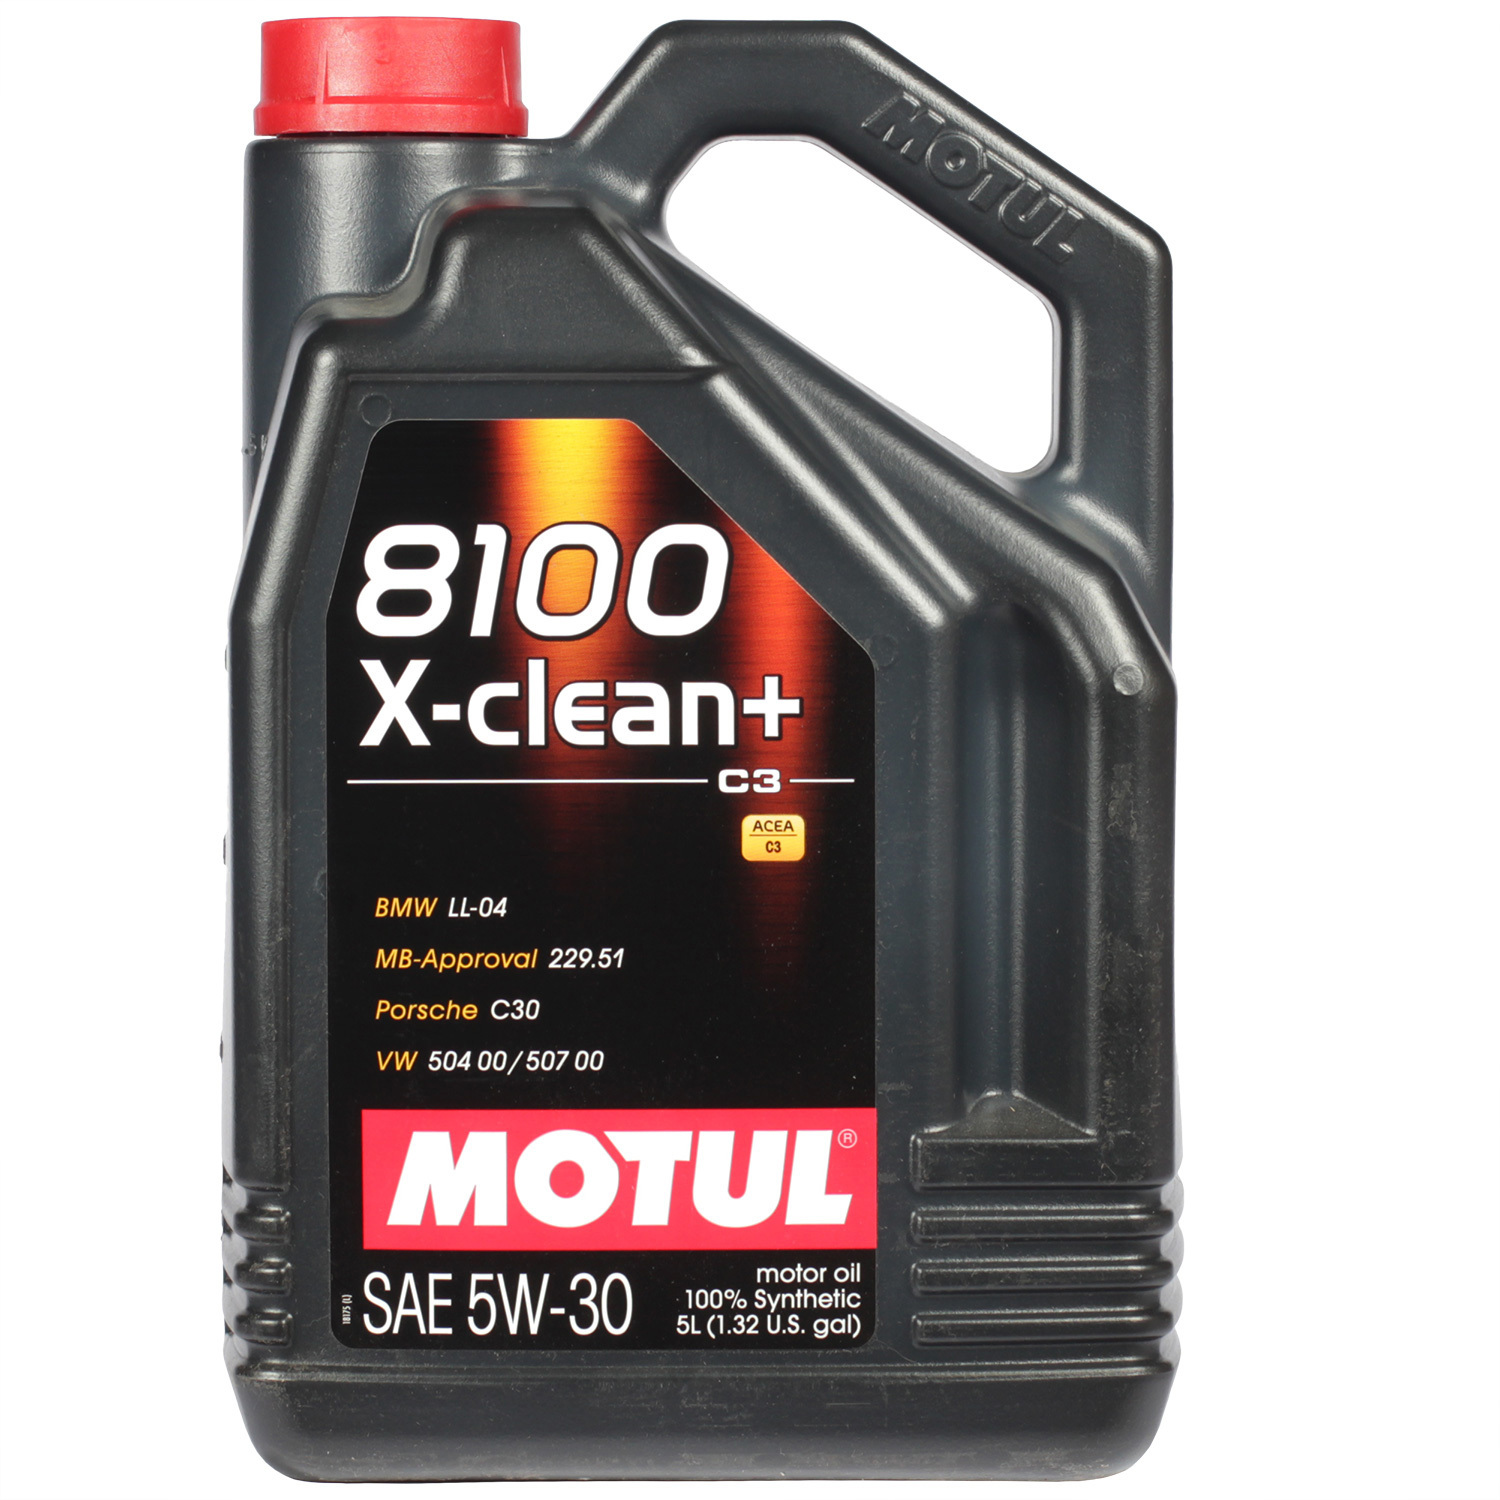 Motul Моторное масло Motul 8100 X-clean+ 5W-30, 5 л motul моторное масло motul specific 913d 5w 30 5 л